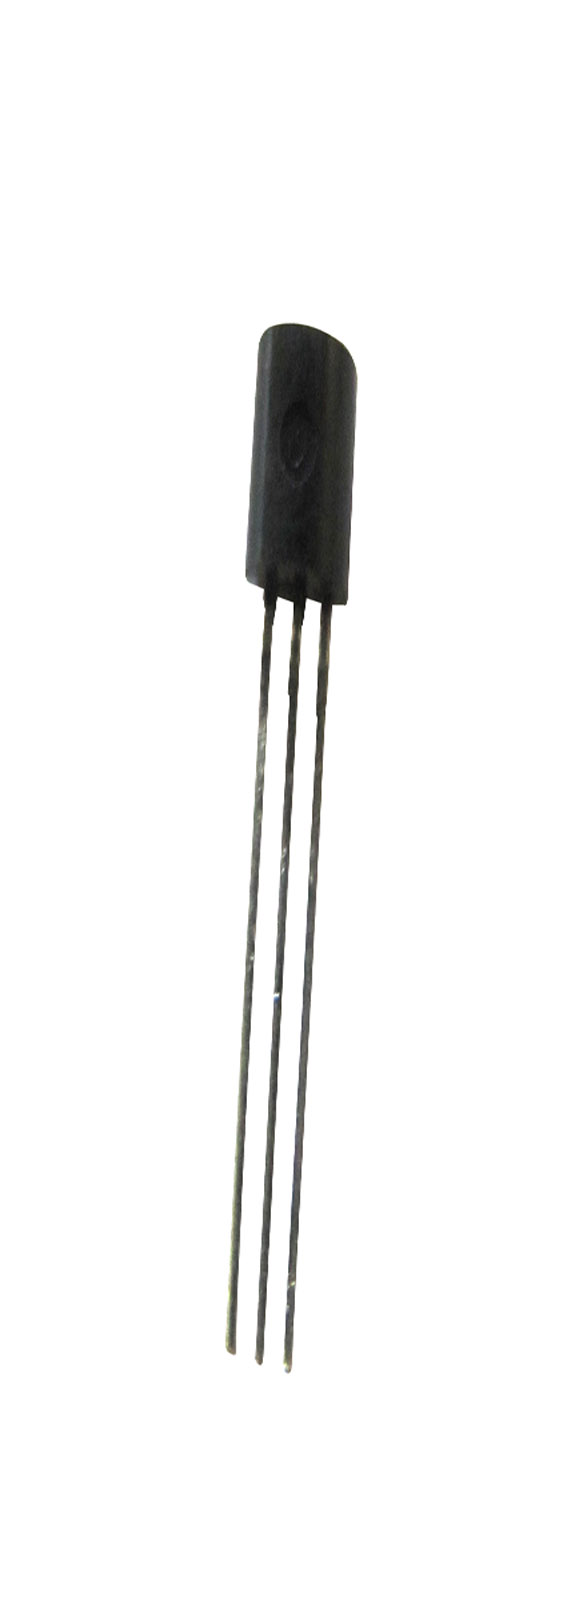 Transistor para electrónica 2N3904 - 2N3904 - FAIRCHILD